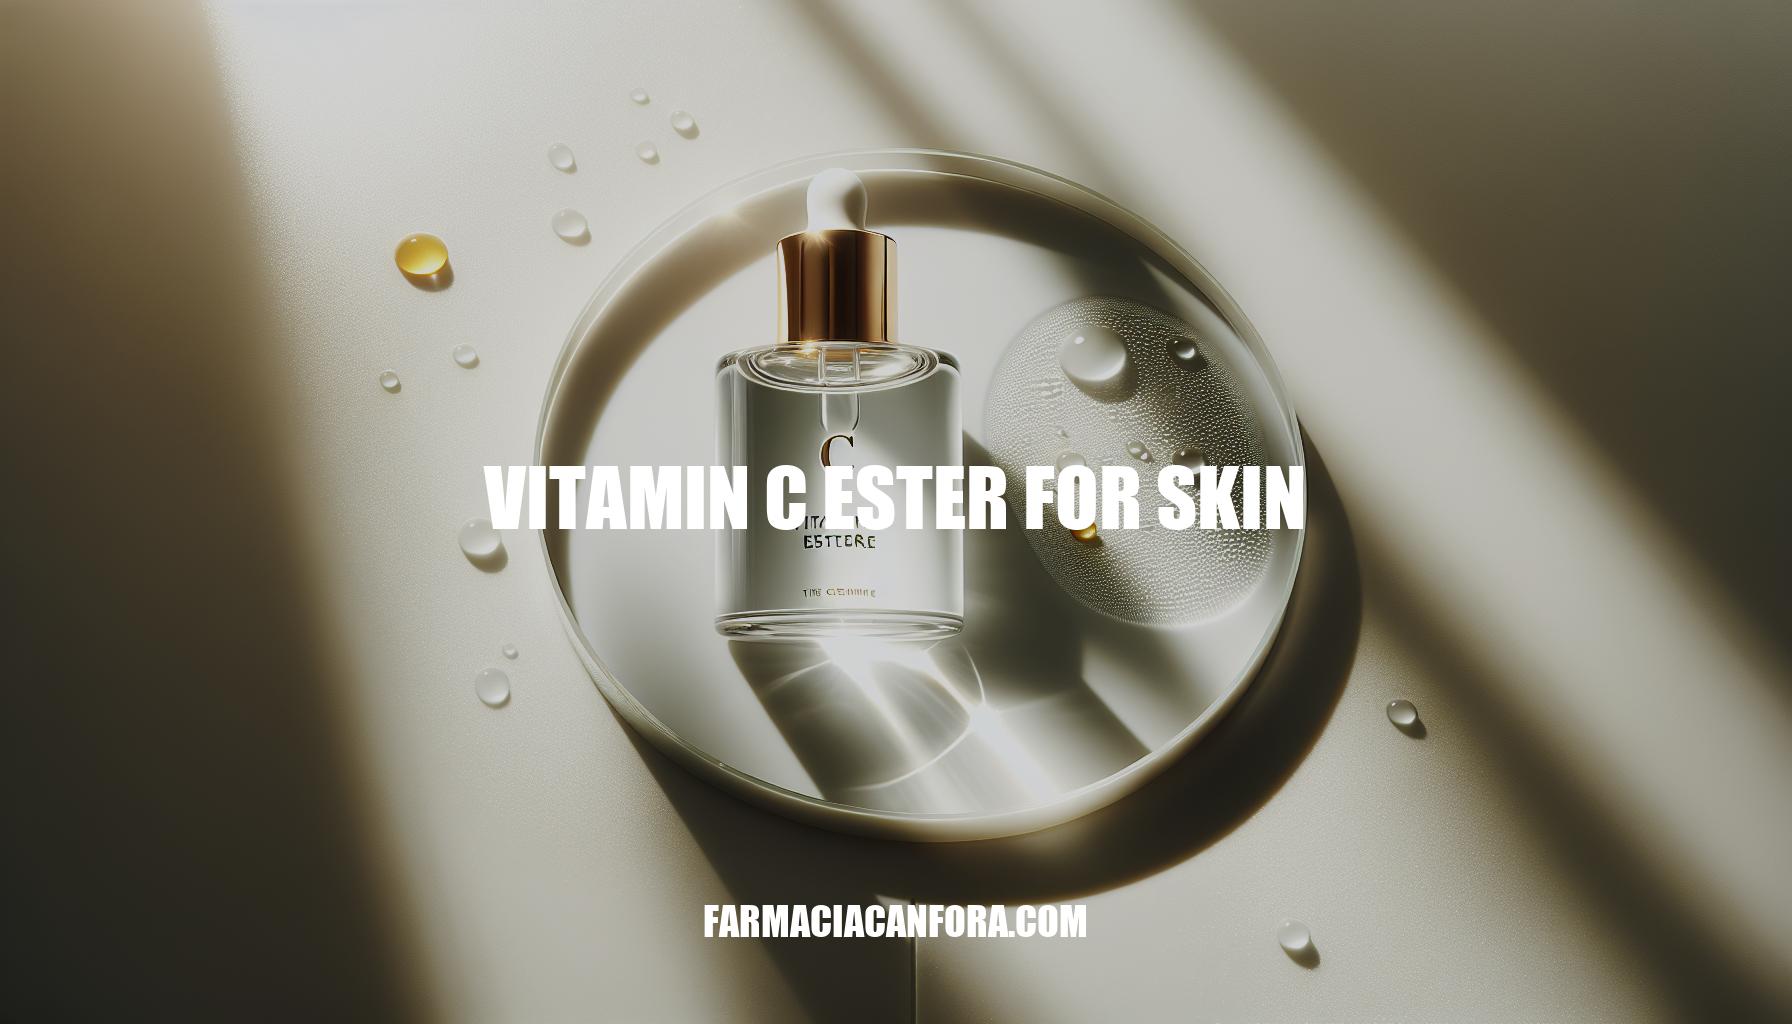 Vitamin C Ester for Skin: The Ultimate Guide